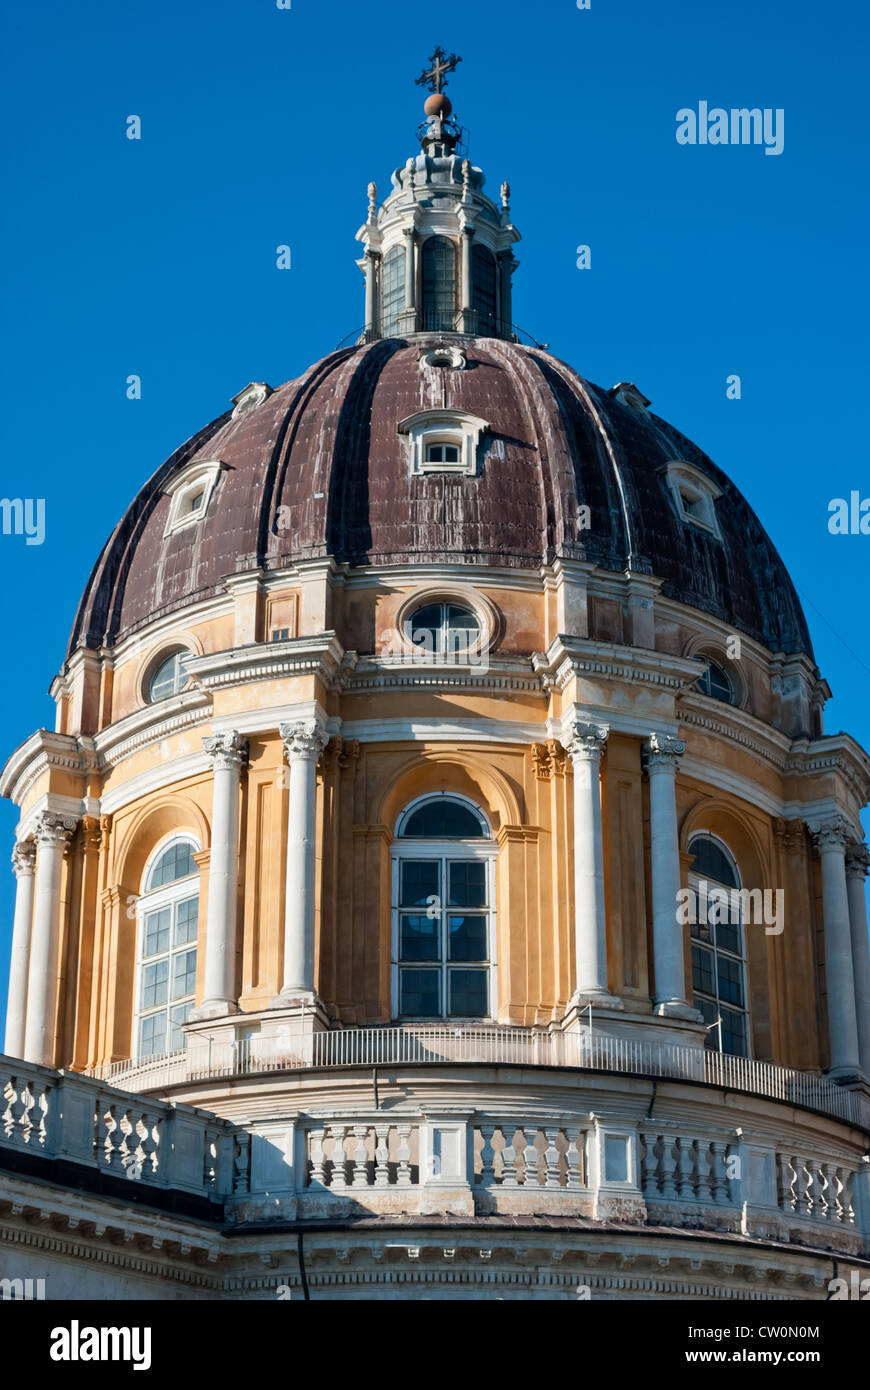 Basilica di Superga dome detail, Turin, Italy Stock Photo